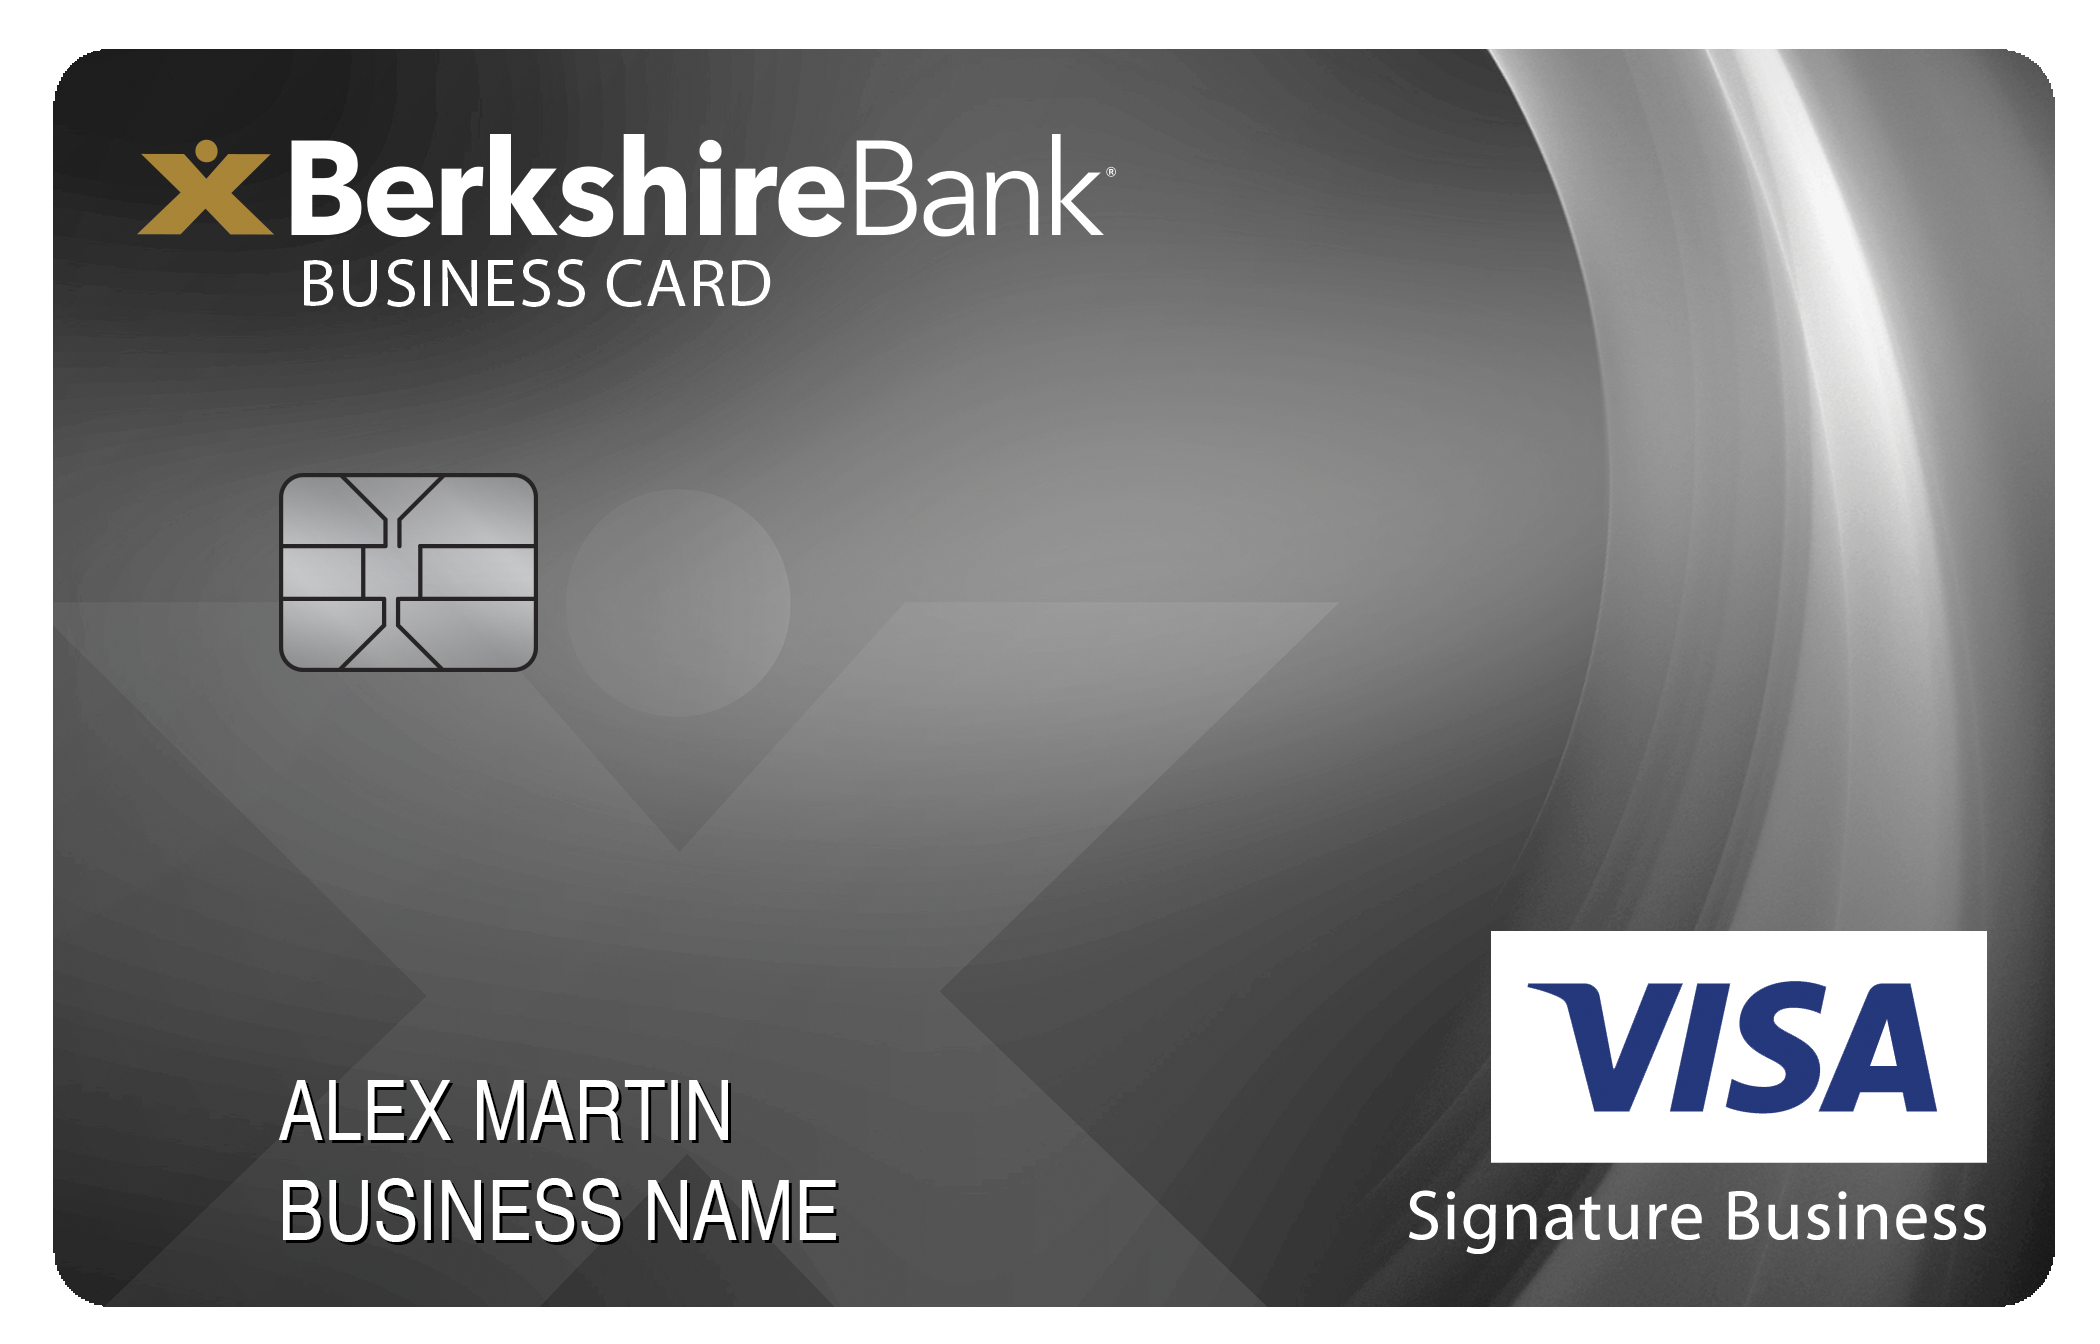 Berkshire Bank